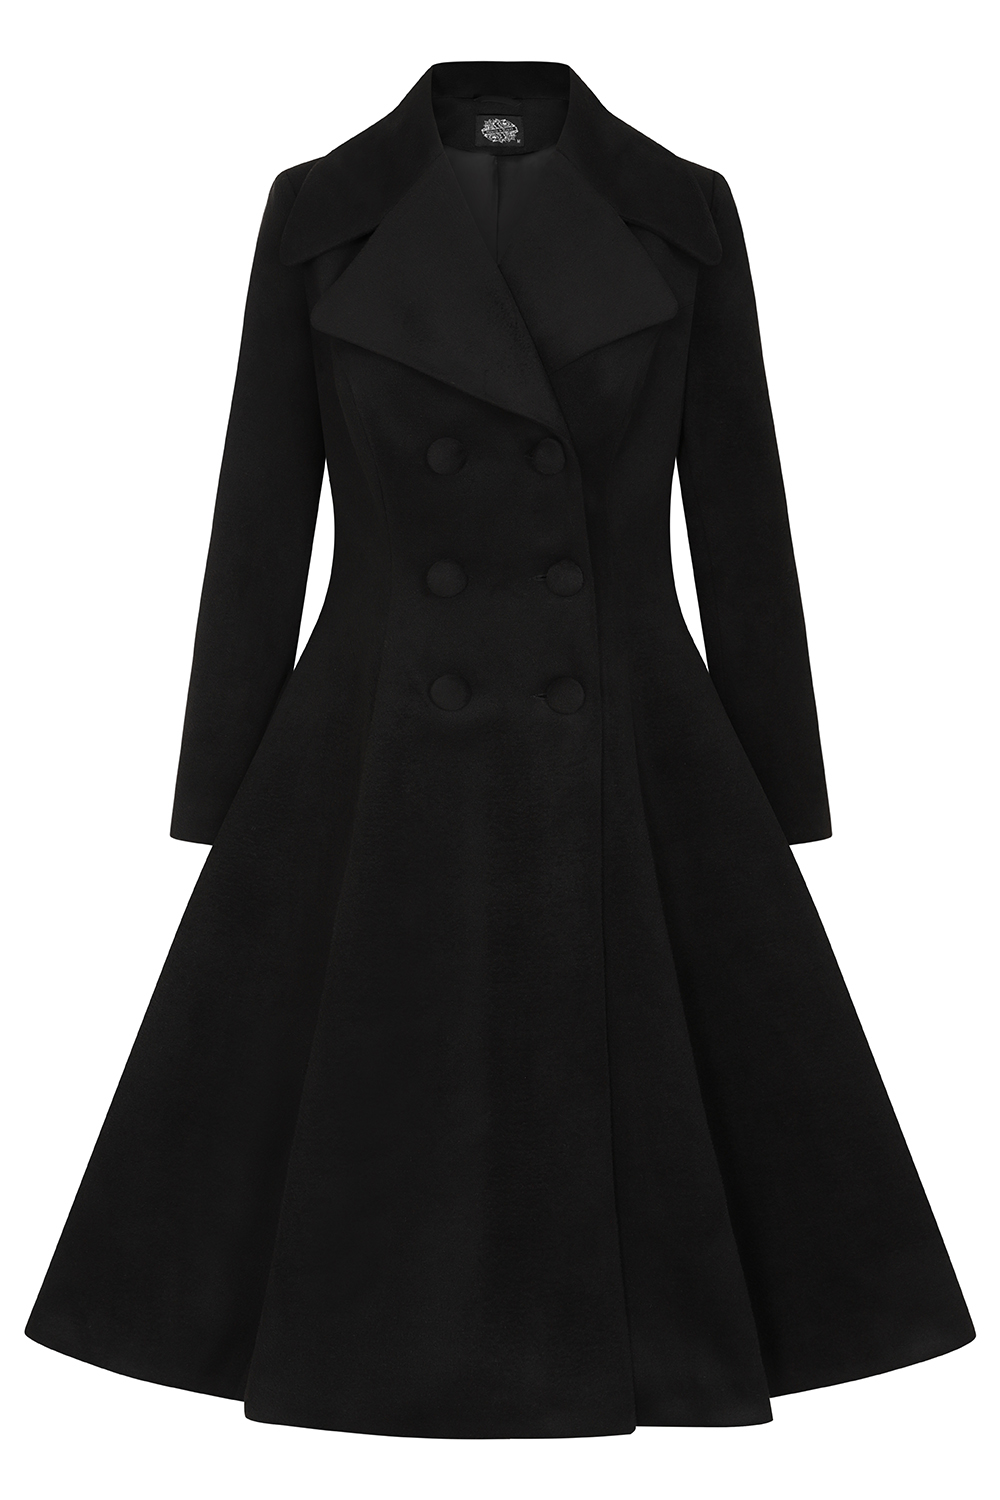 Laura Swing Coat in Black - Hearts & Roses London